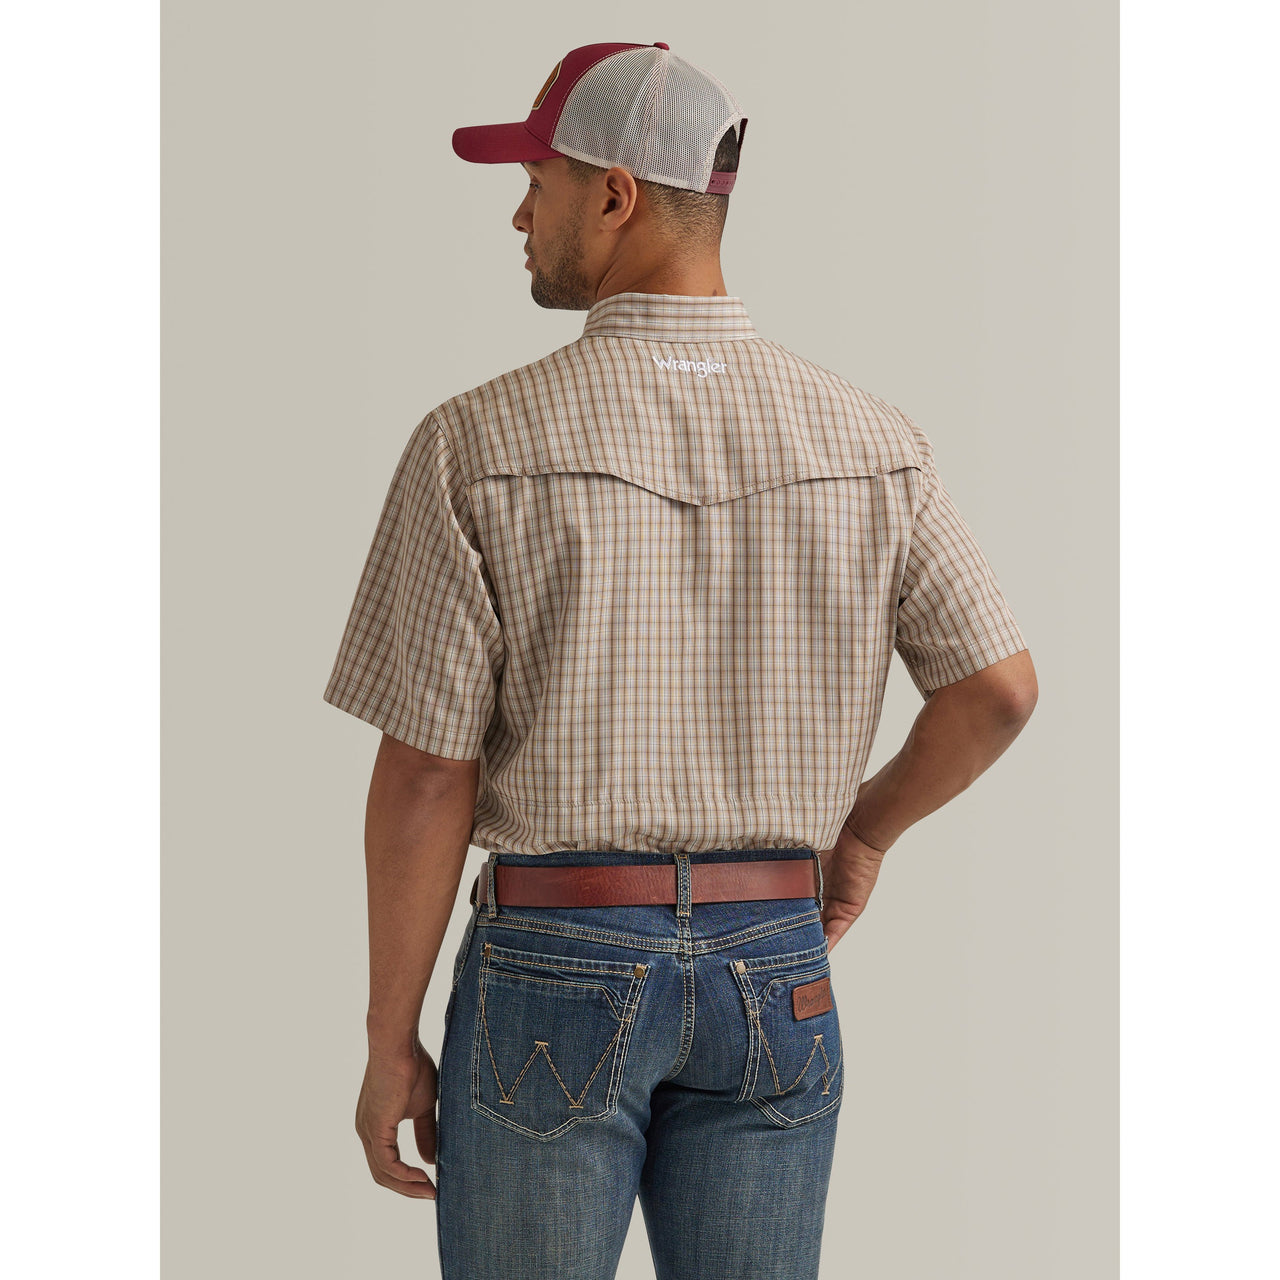 Wrangler Men's Performance Snap Long Sleeve Plaid Shirt - Brown